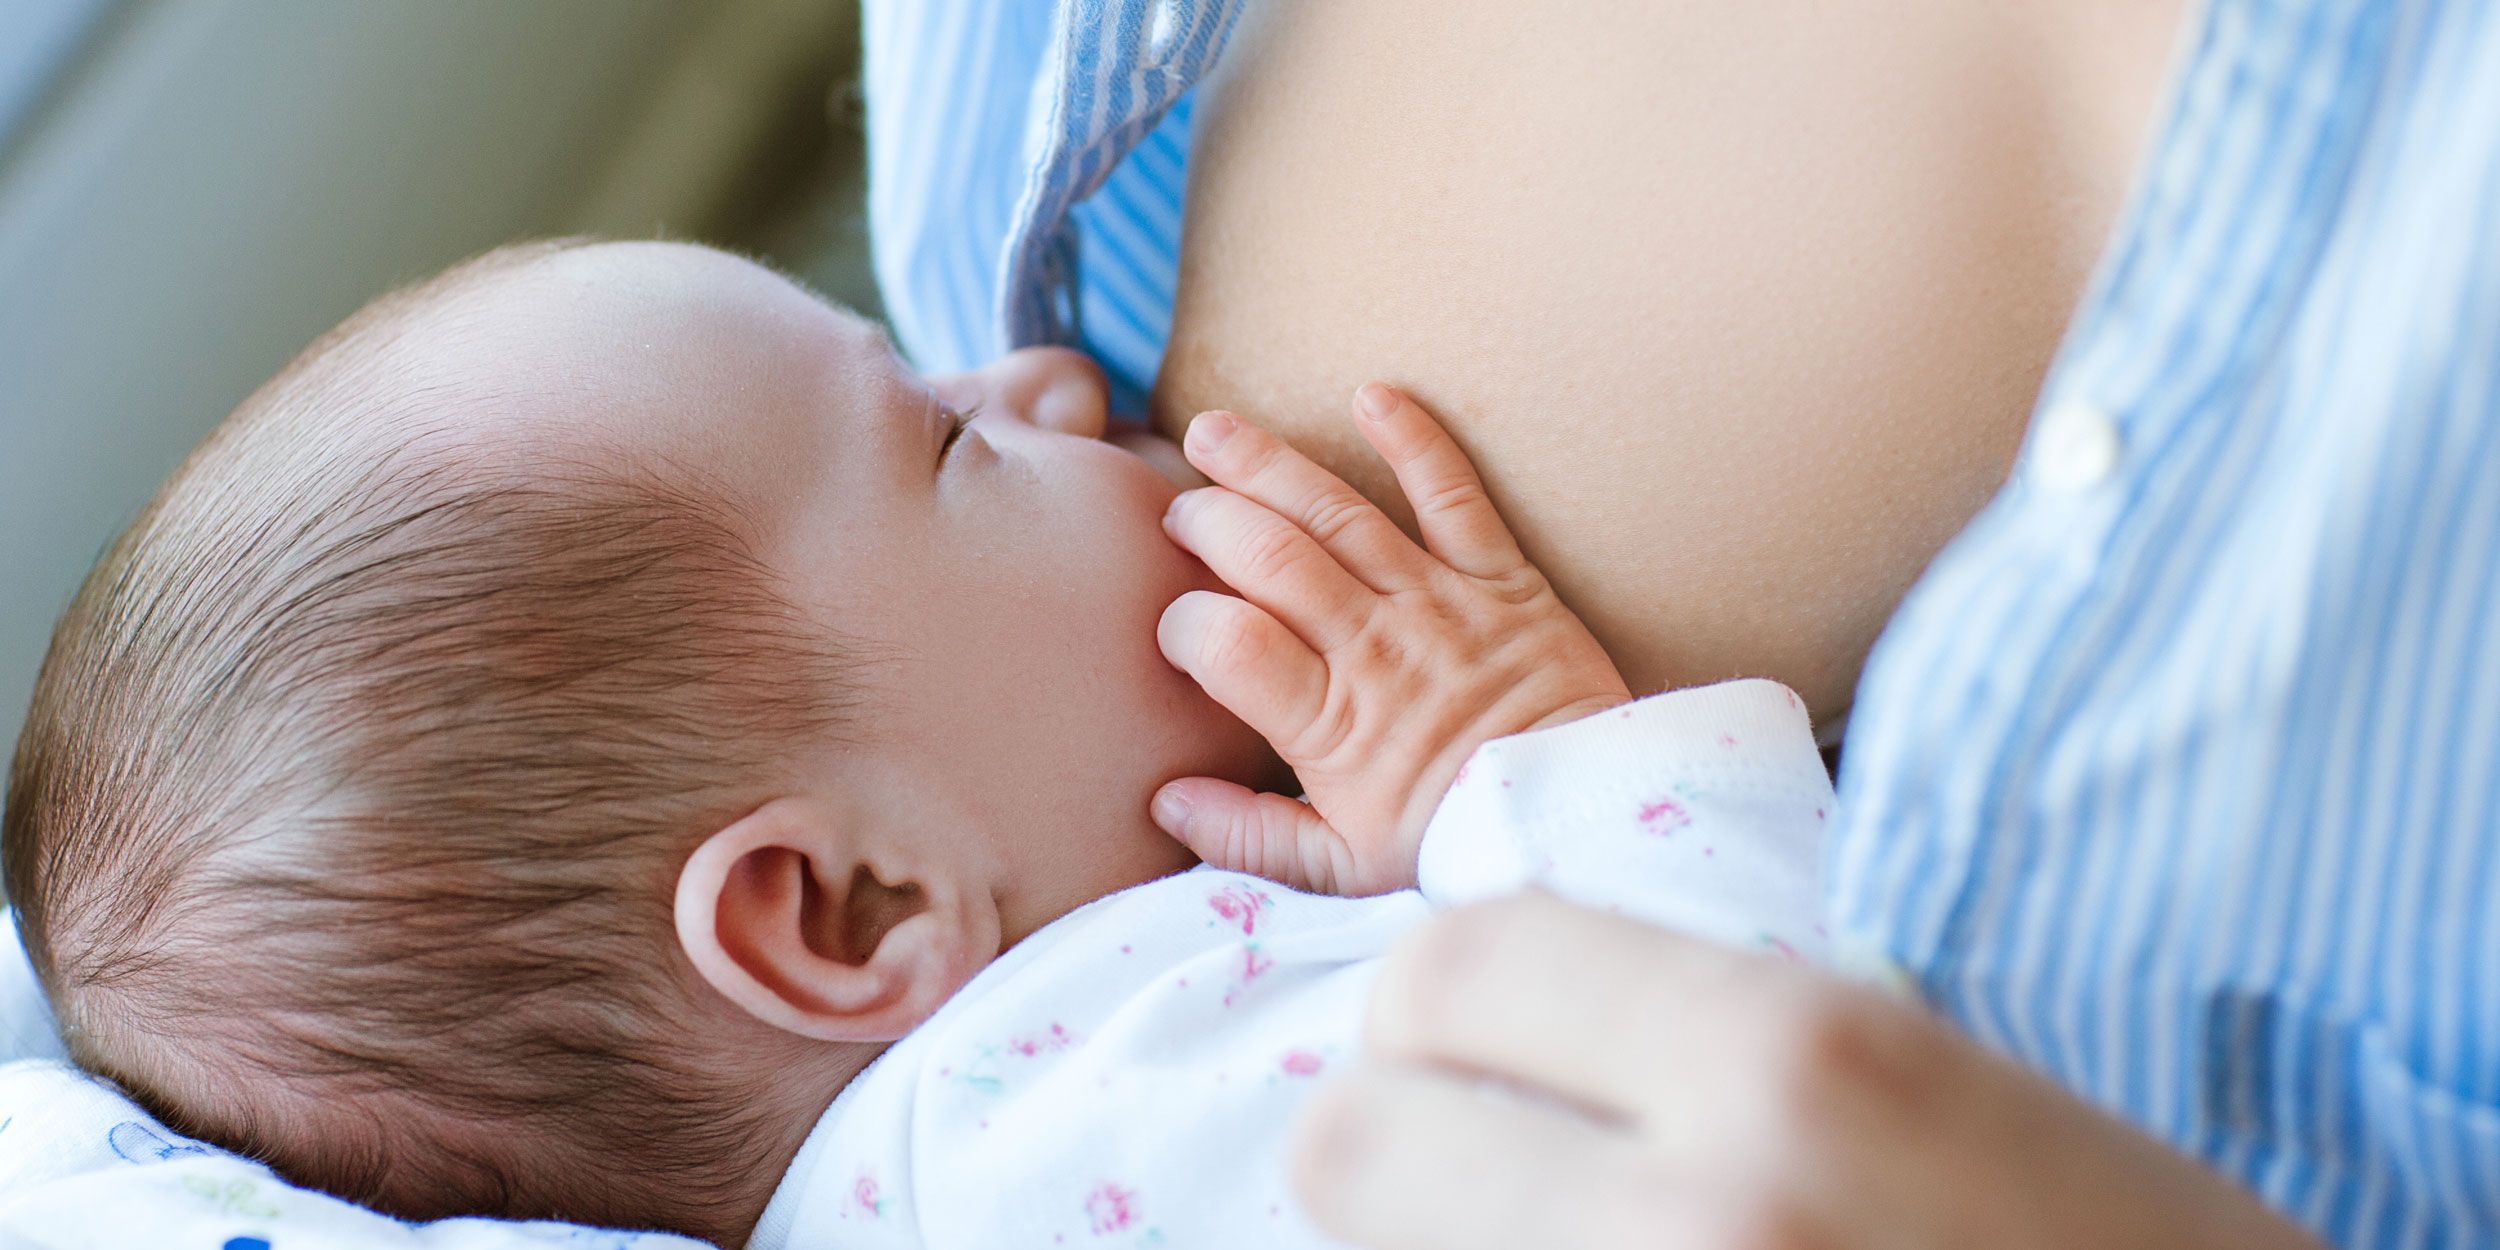 Medical Journal Documents Transgender Woman Breast-Feeding Baby pic